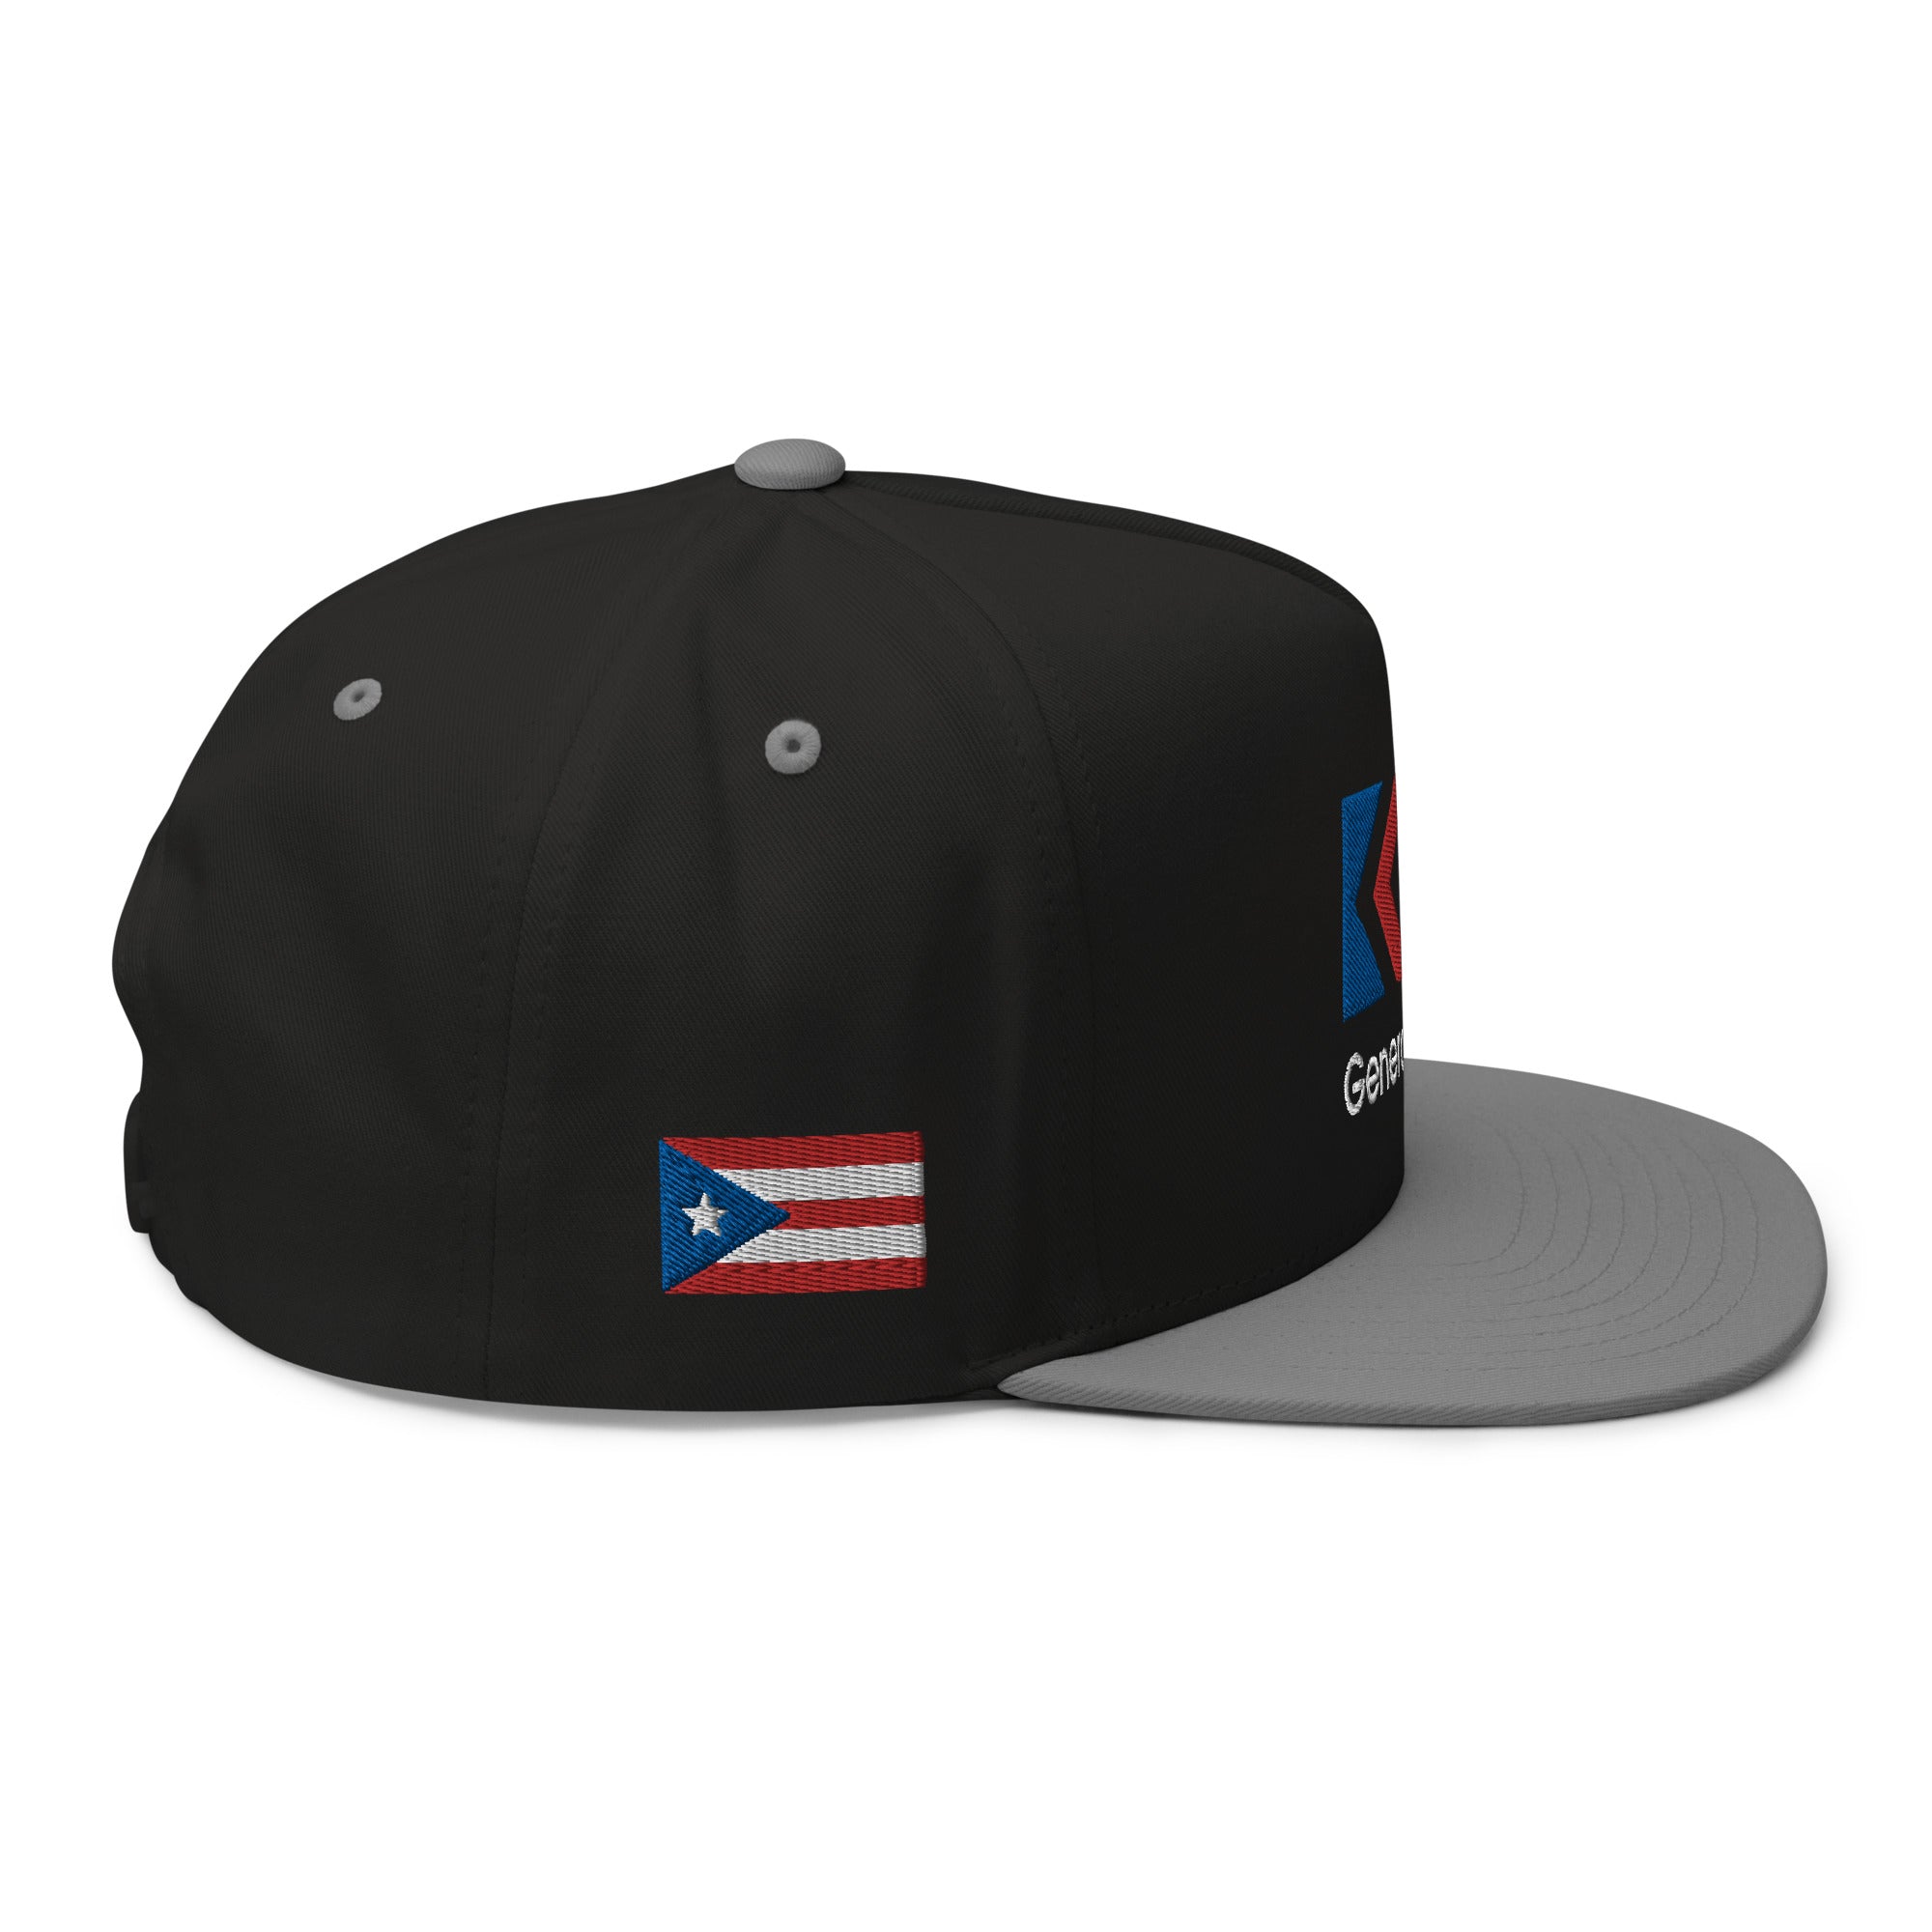 🇵🇷 Puerto Rico Triple K G 3D Snap Back